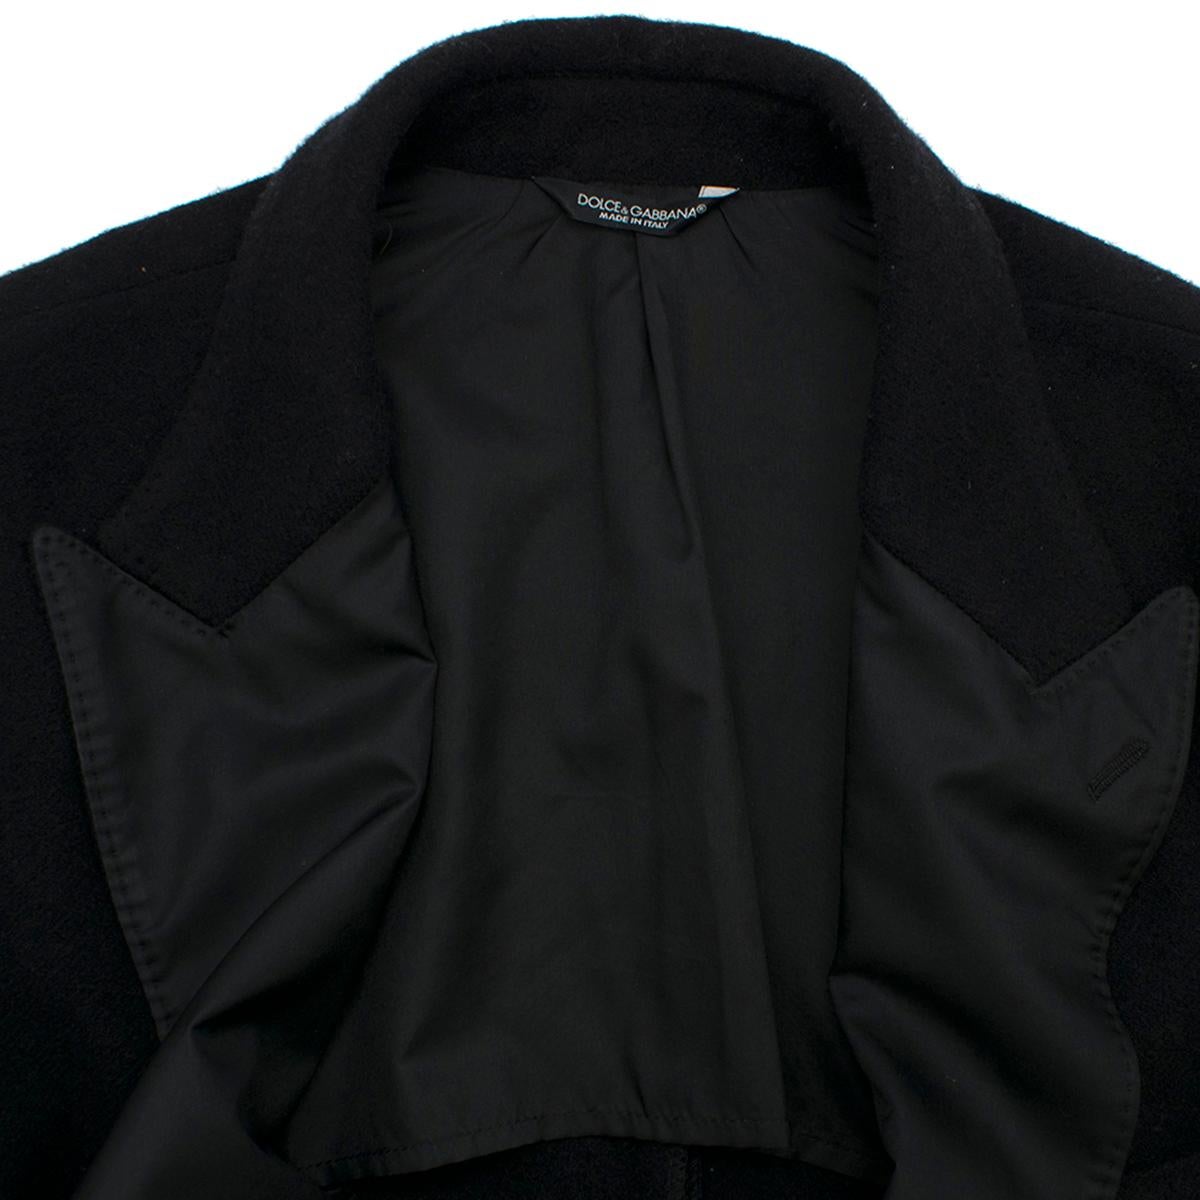 Dolce & Gabbana Men's Black Wool-blend Tailored Jacket estimated SIZE S 1